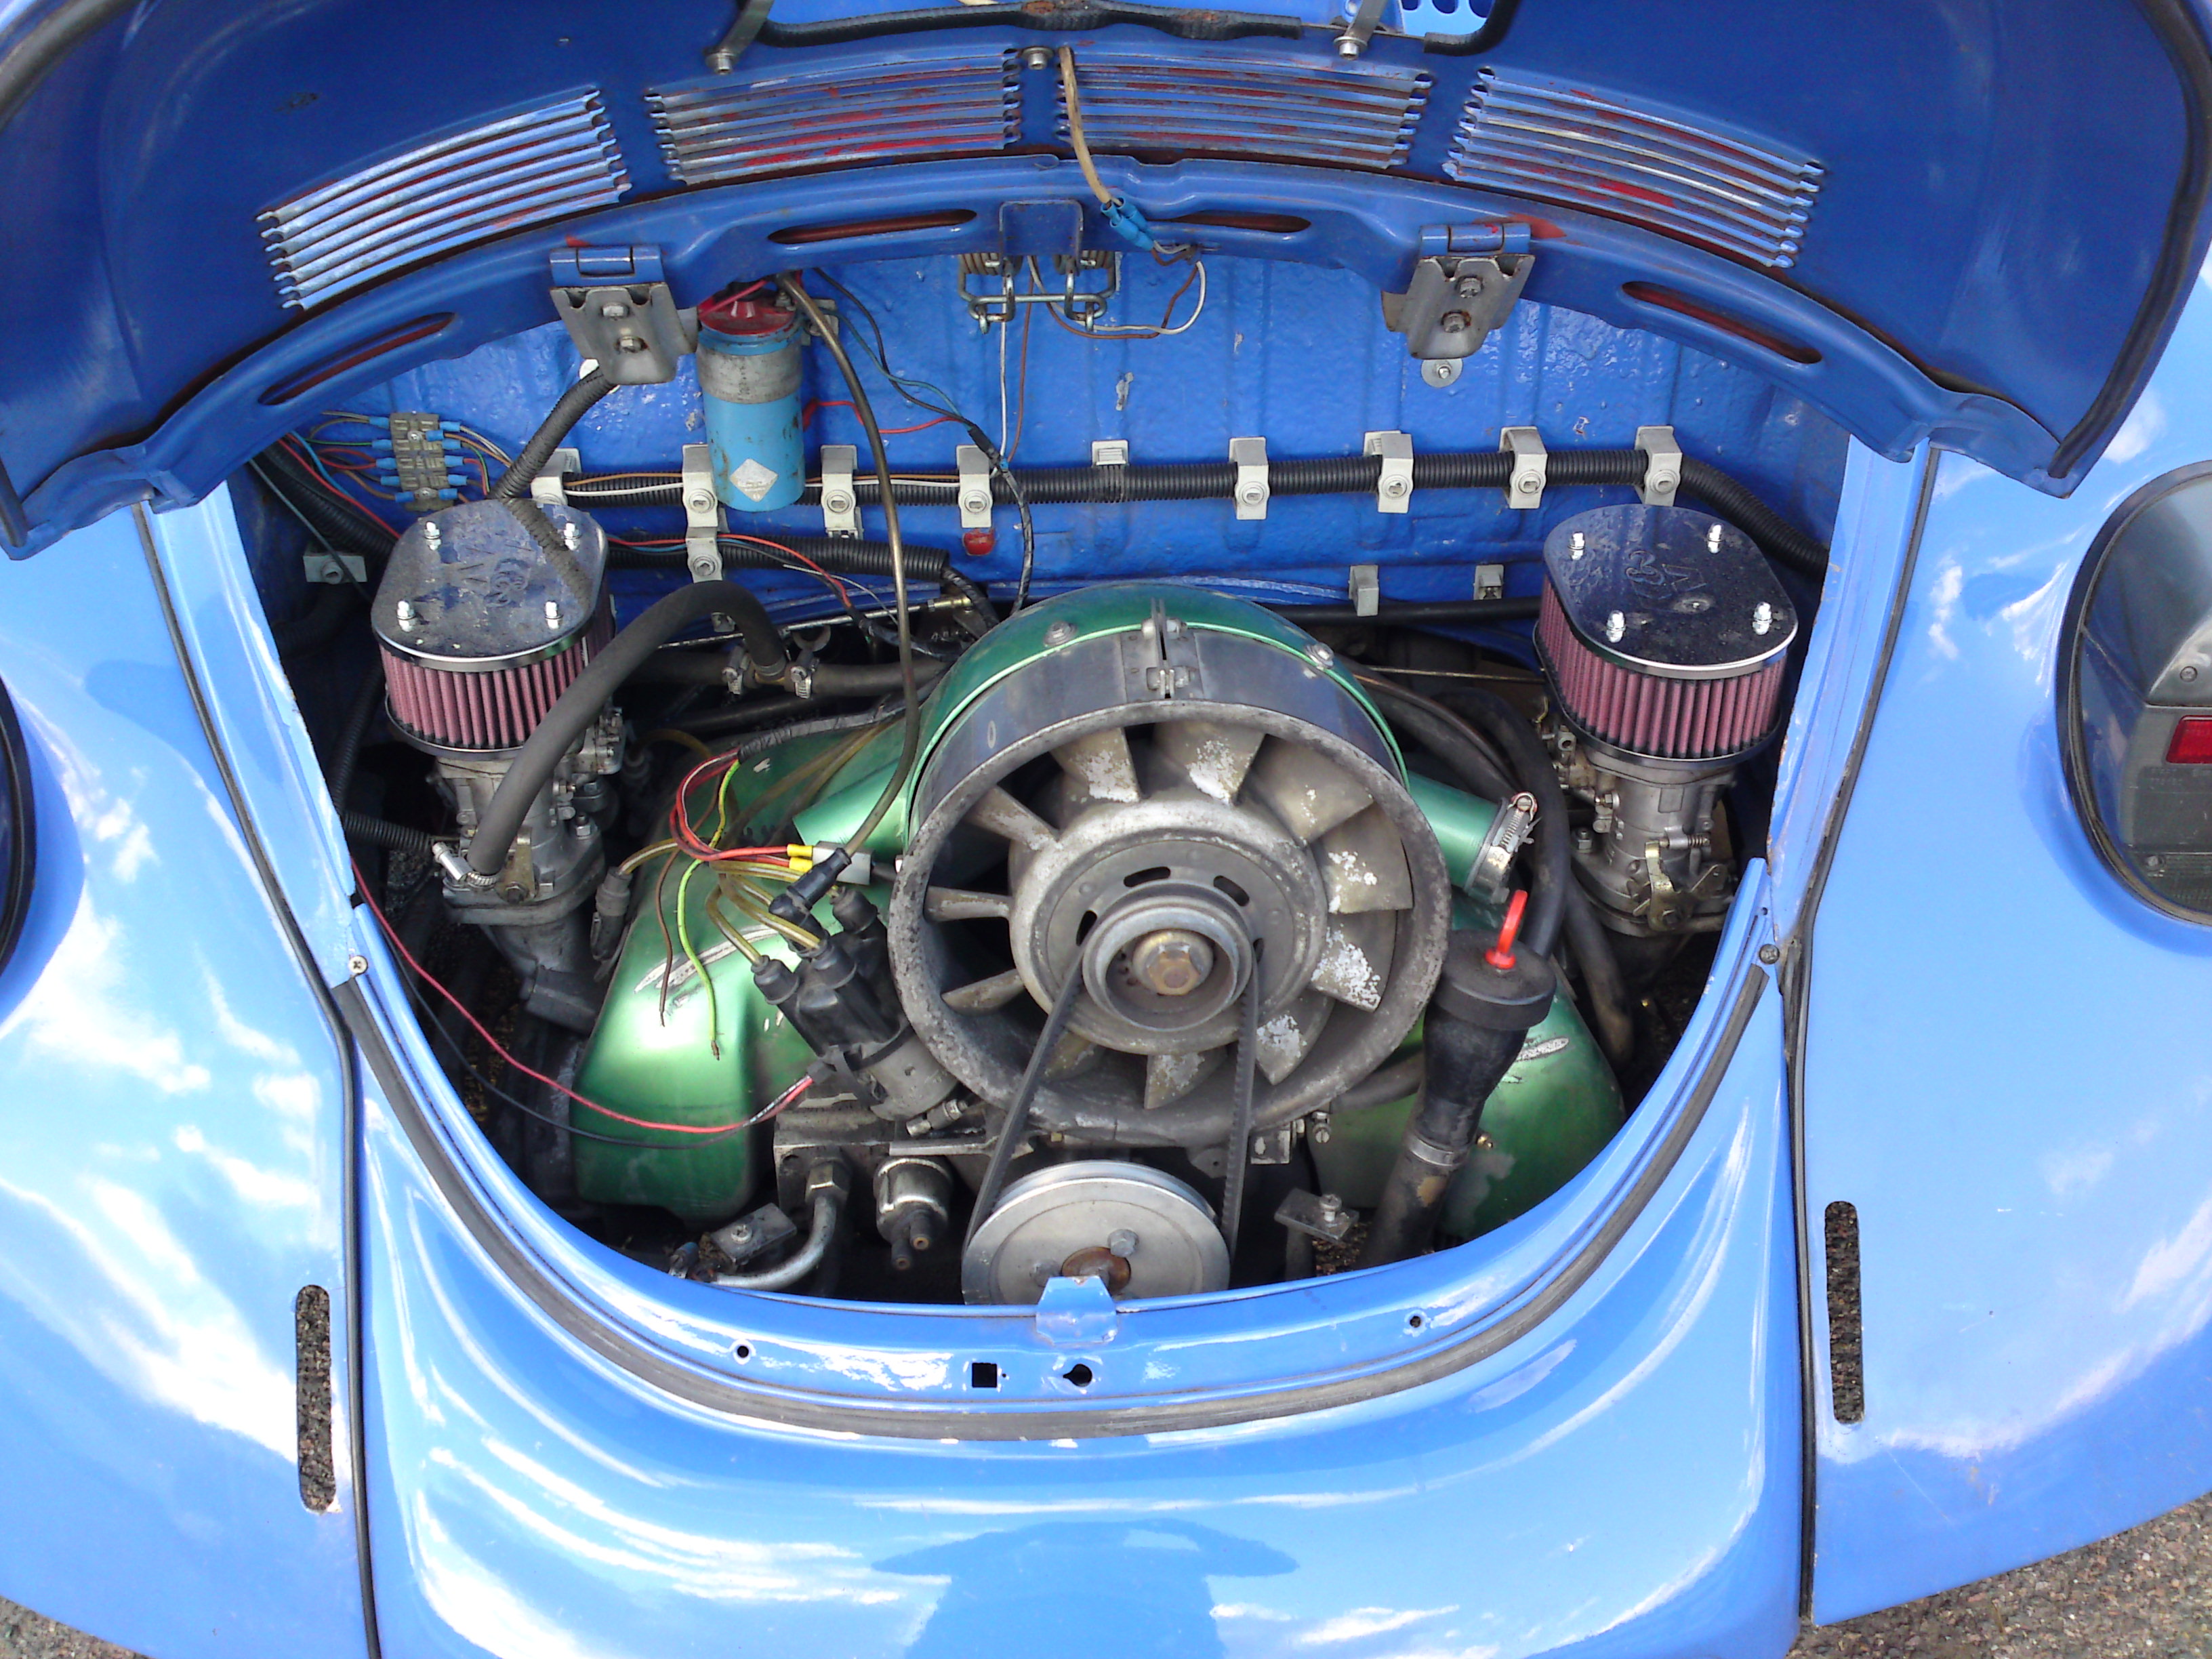 Porsche 914 engine in Beetle